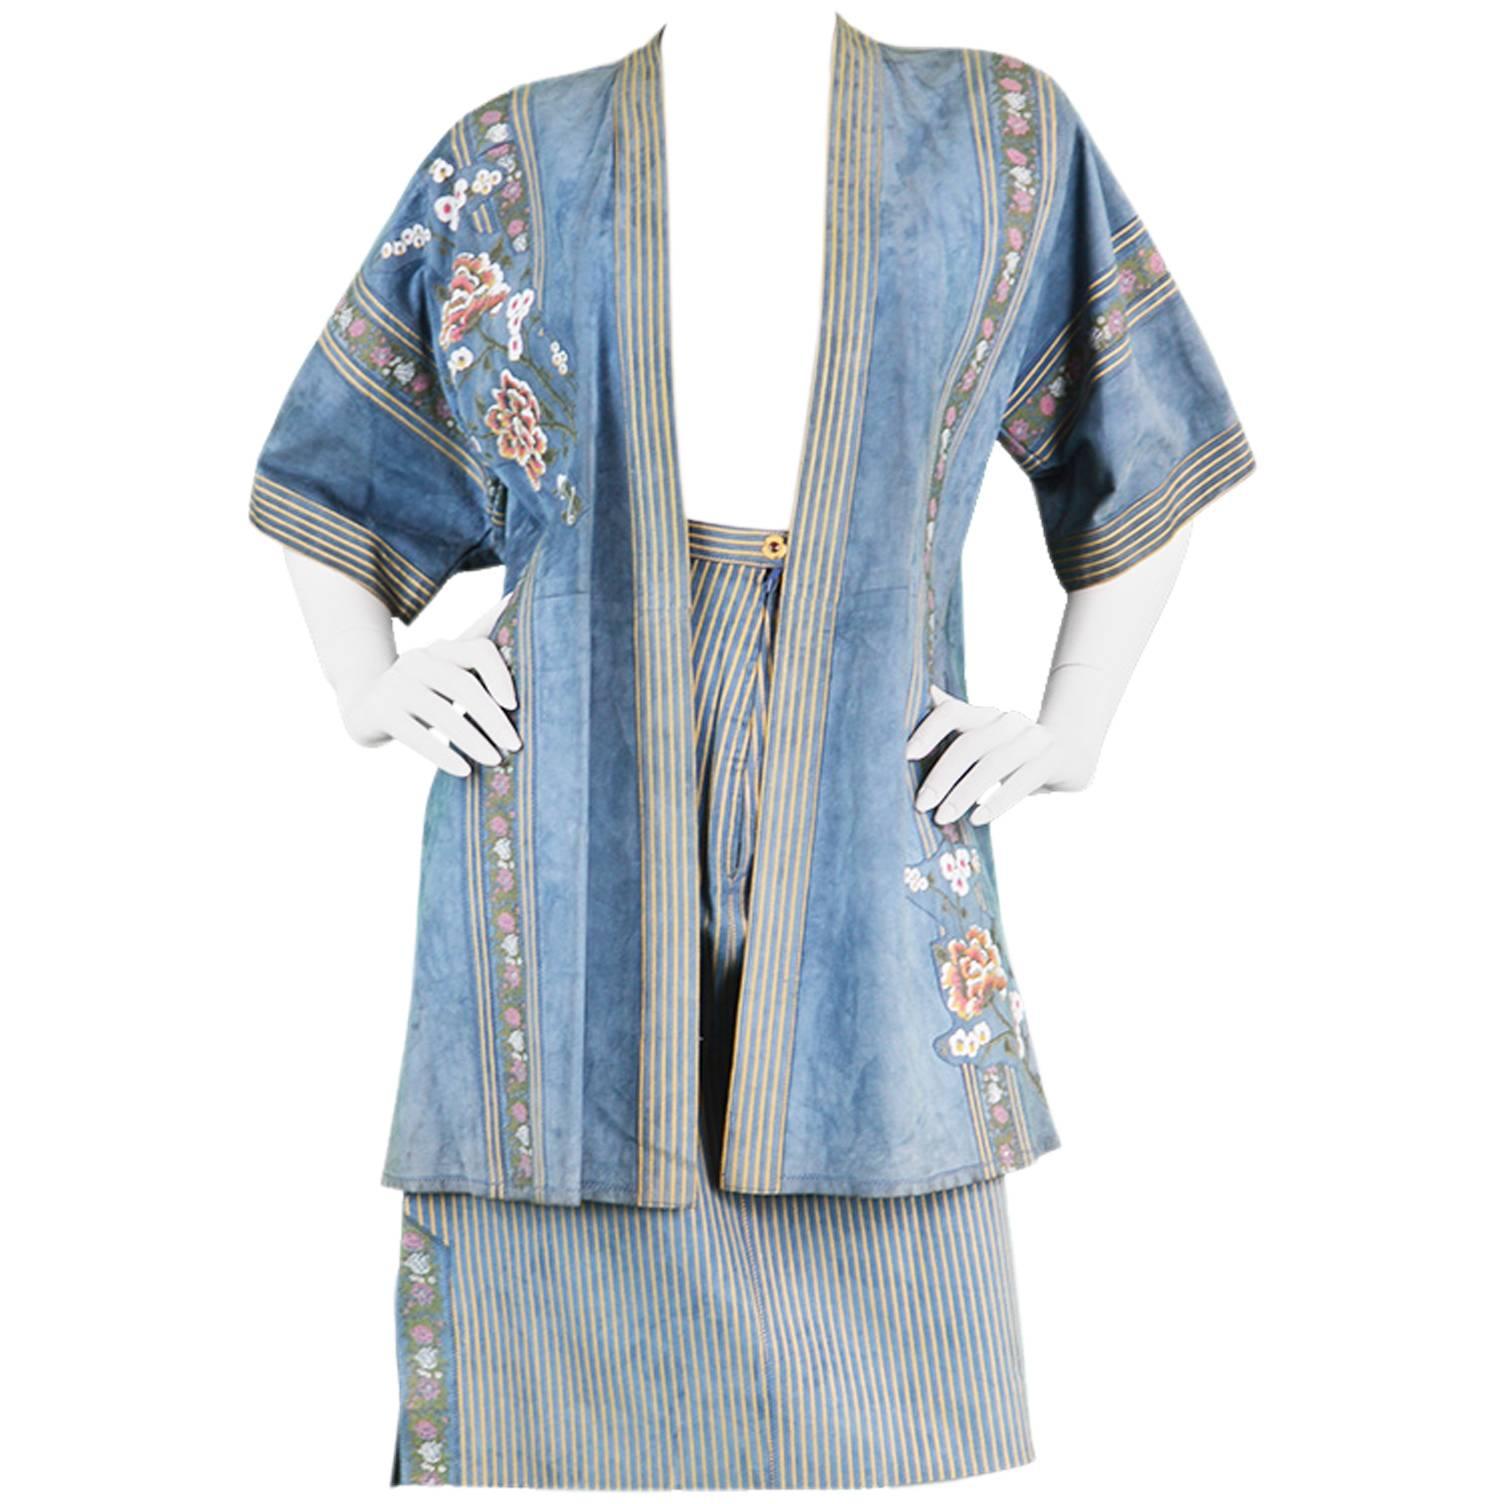 Roberto Cavalli 1970s Printed Blue Suede Oriental Jacket & Skirt Suit For Sale